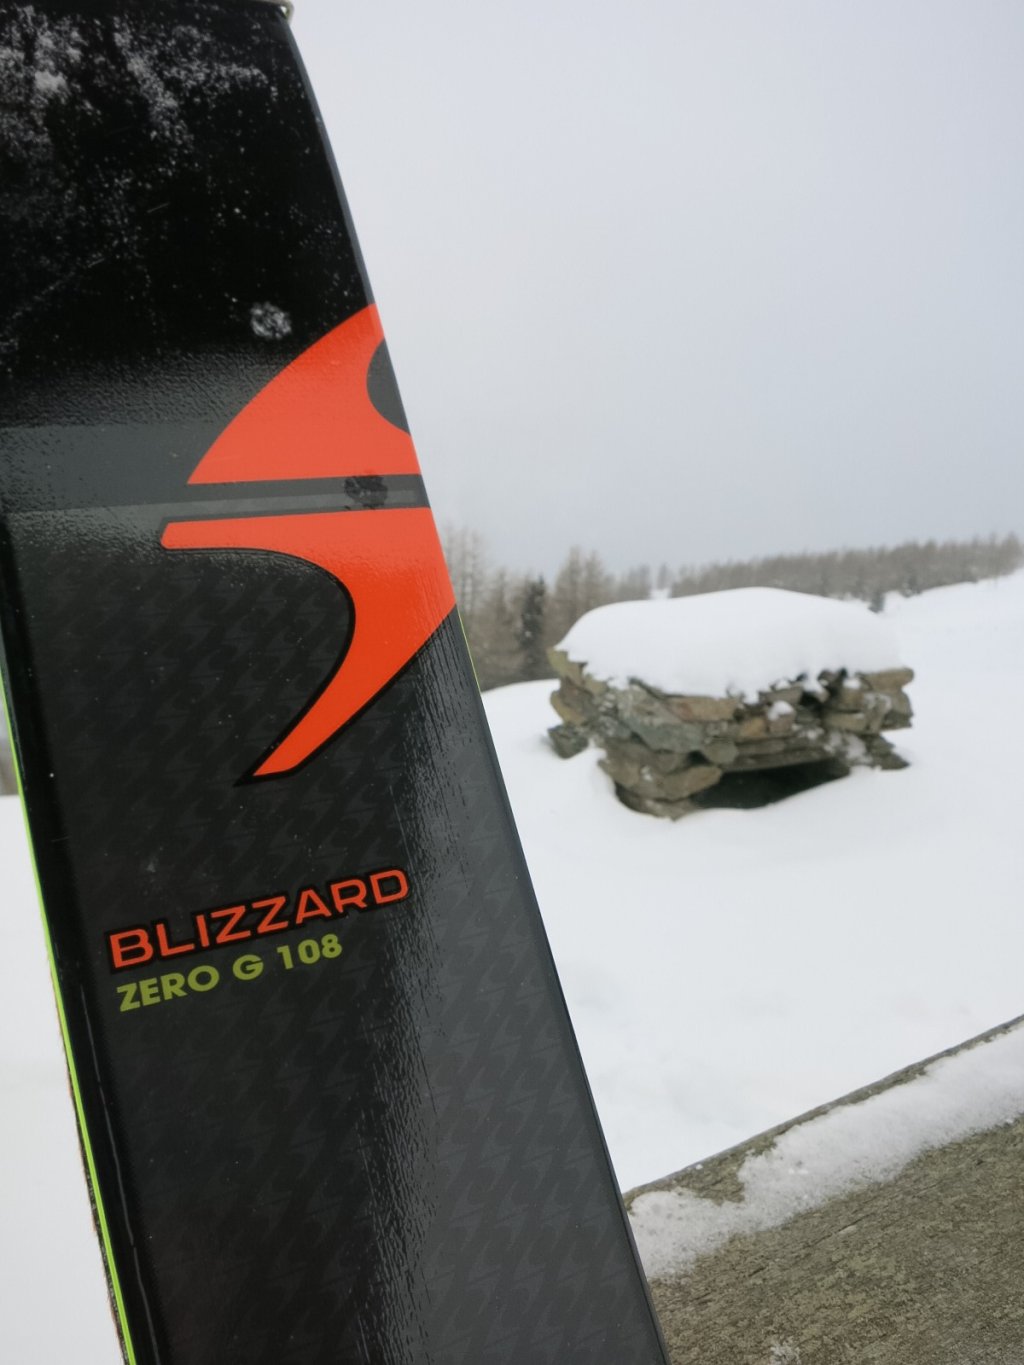 Blizzard Zero G 108